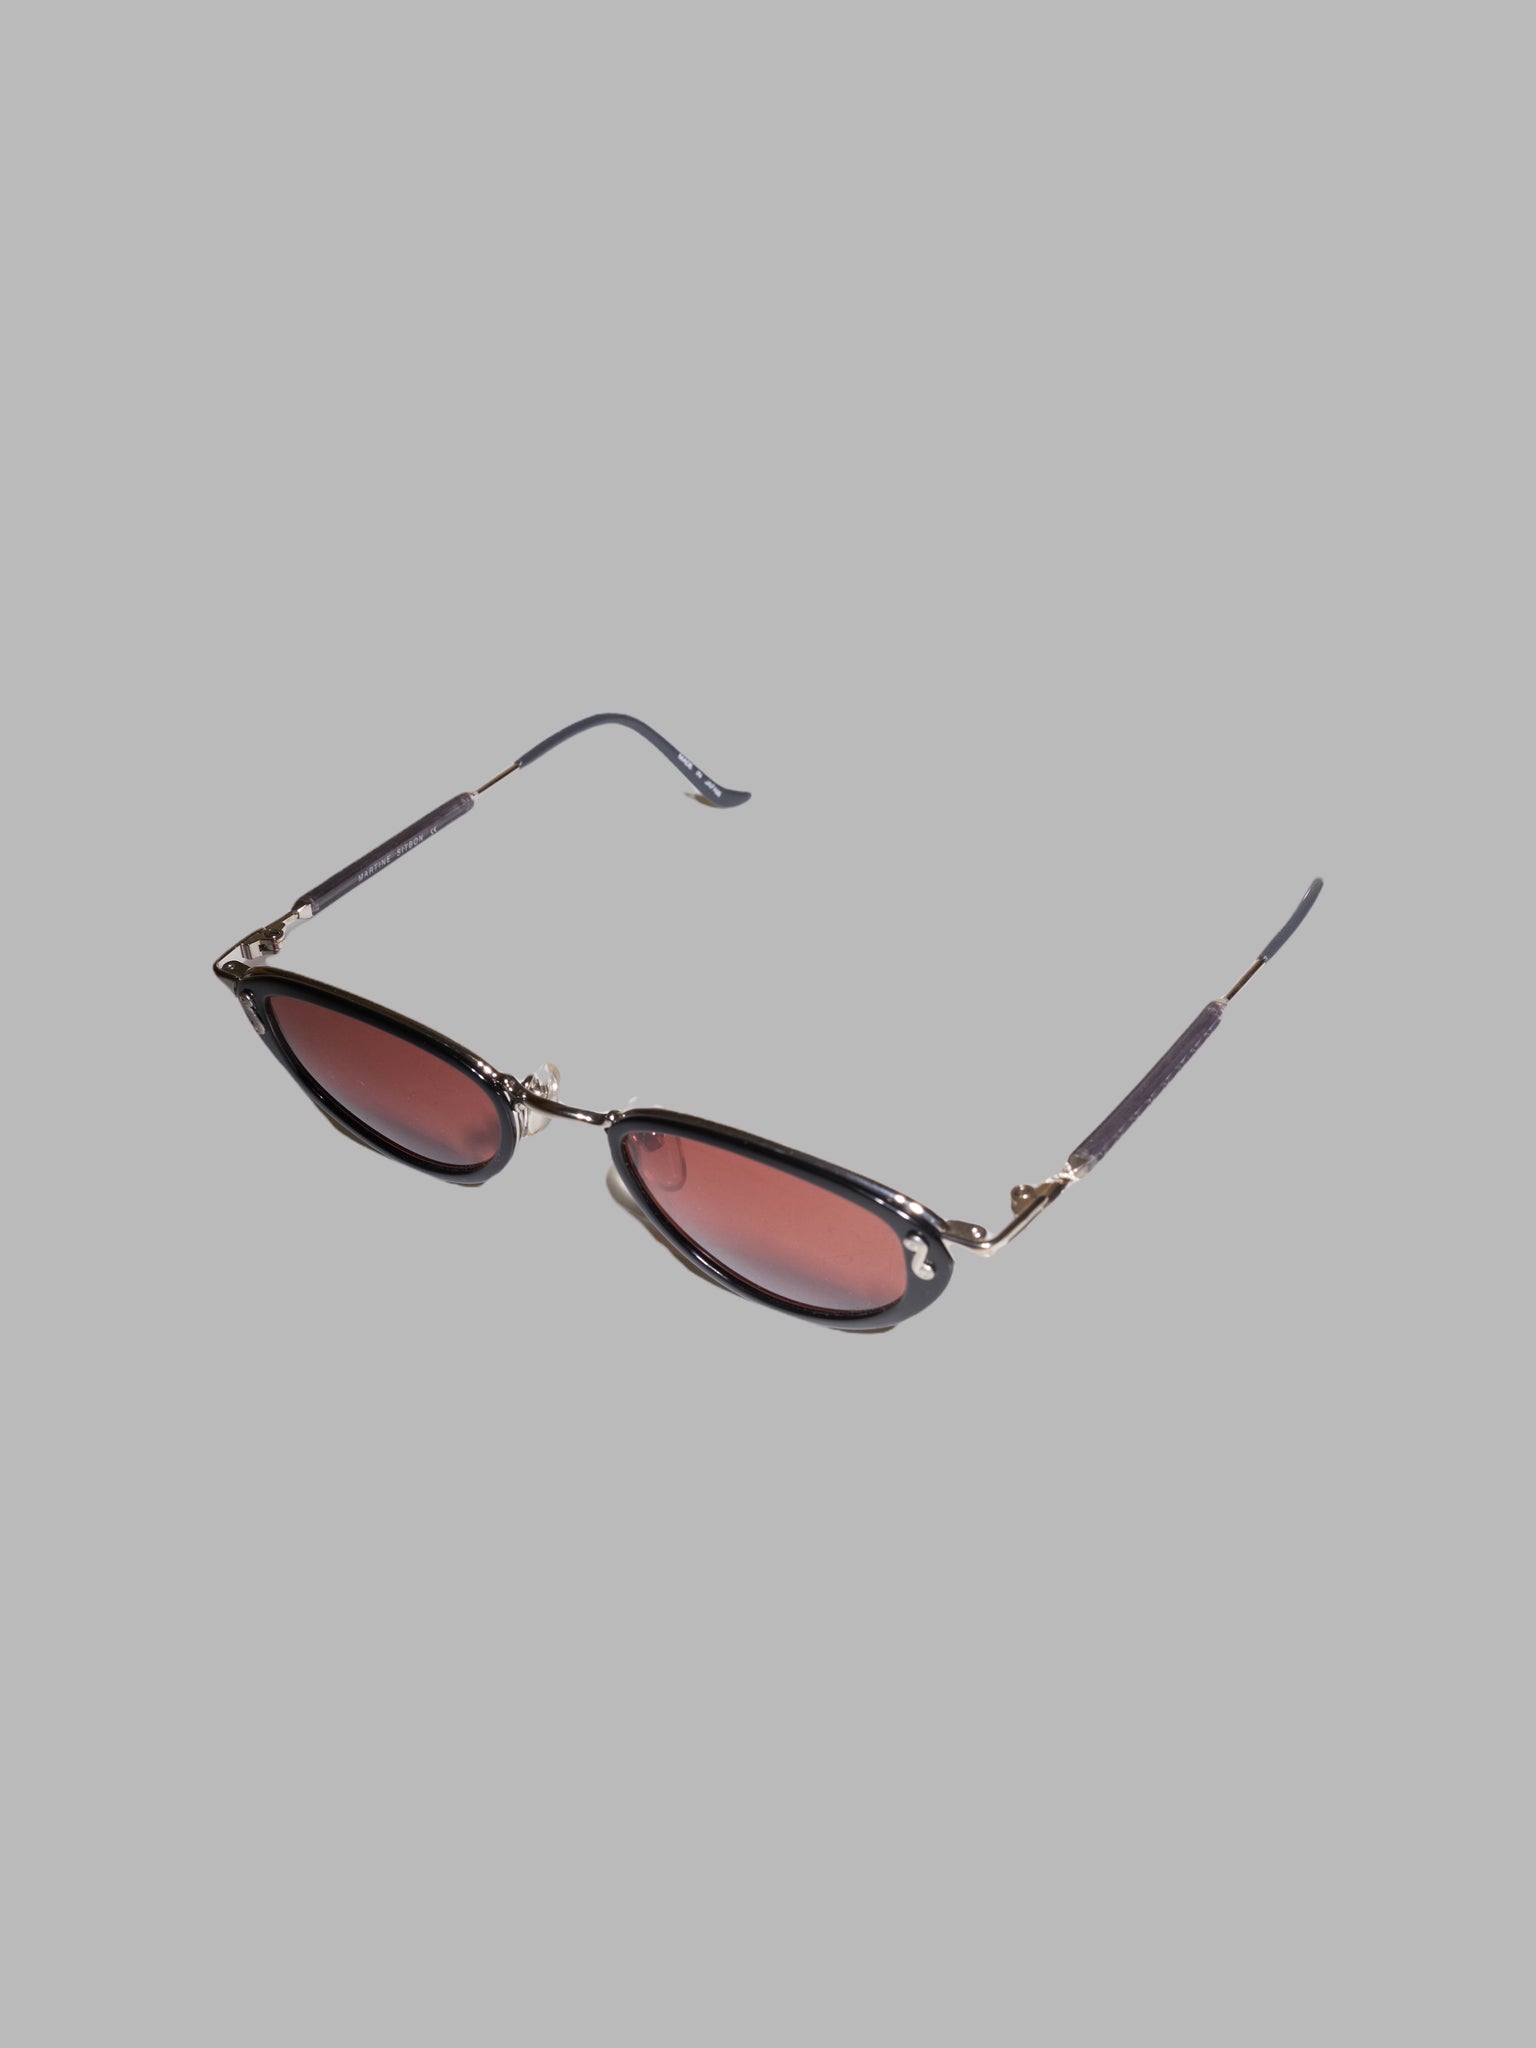 Martine Sitbon black framed sunglasses with dark red brown lenses